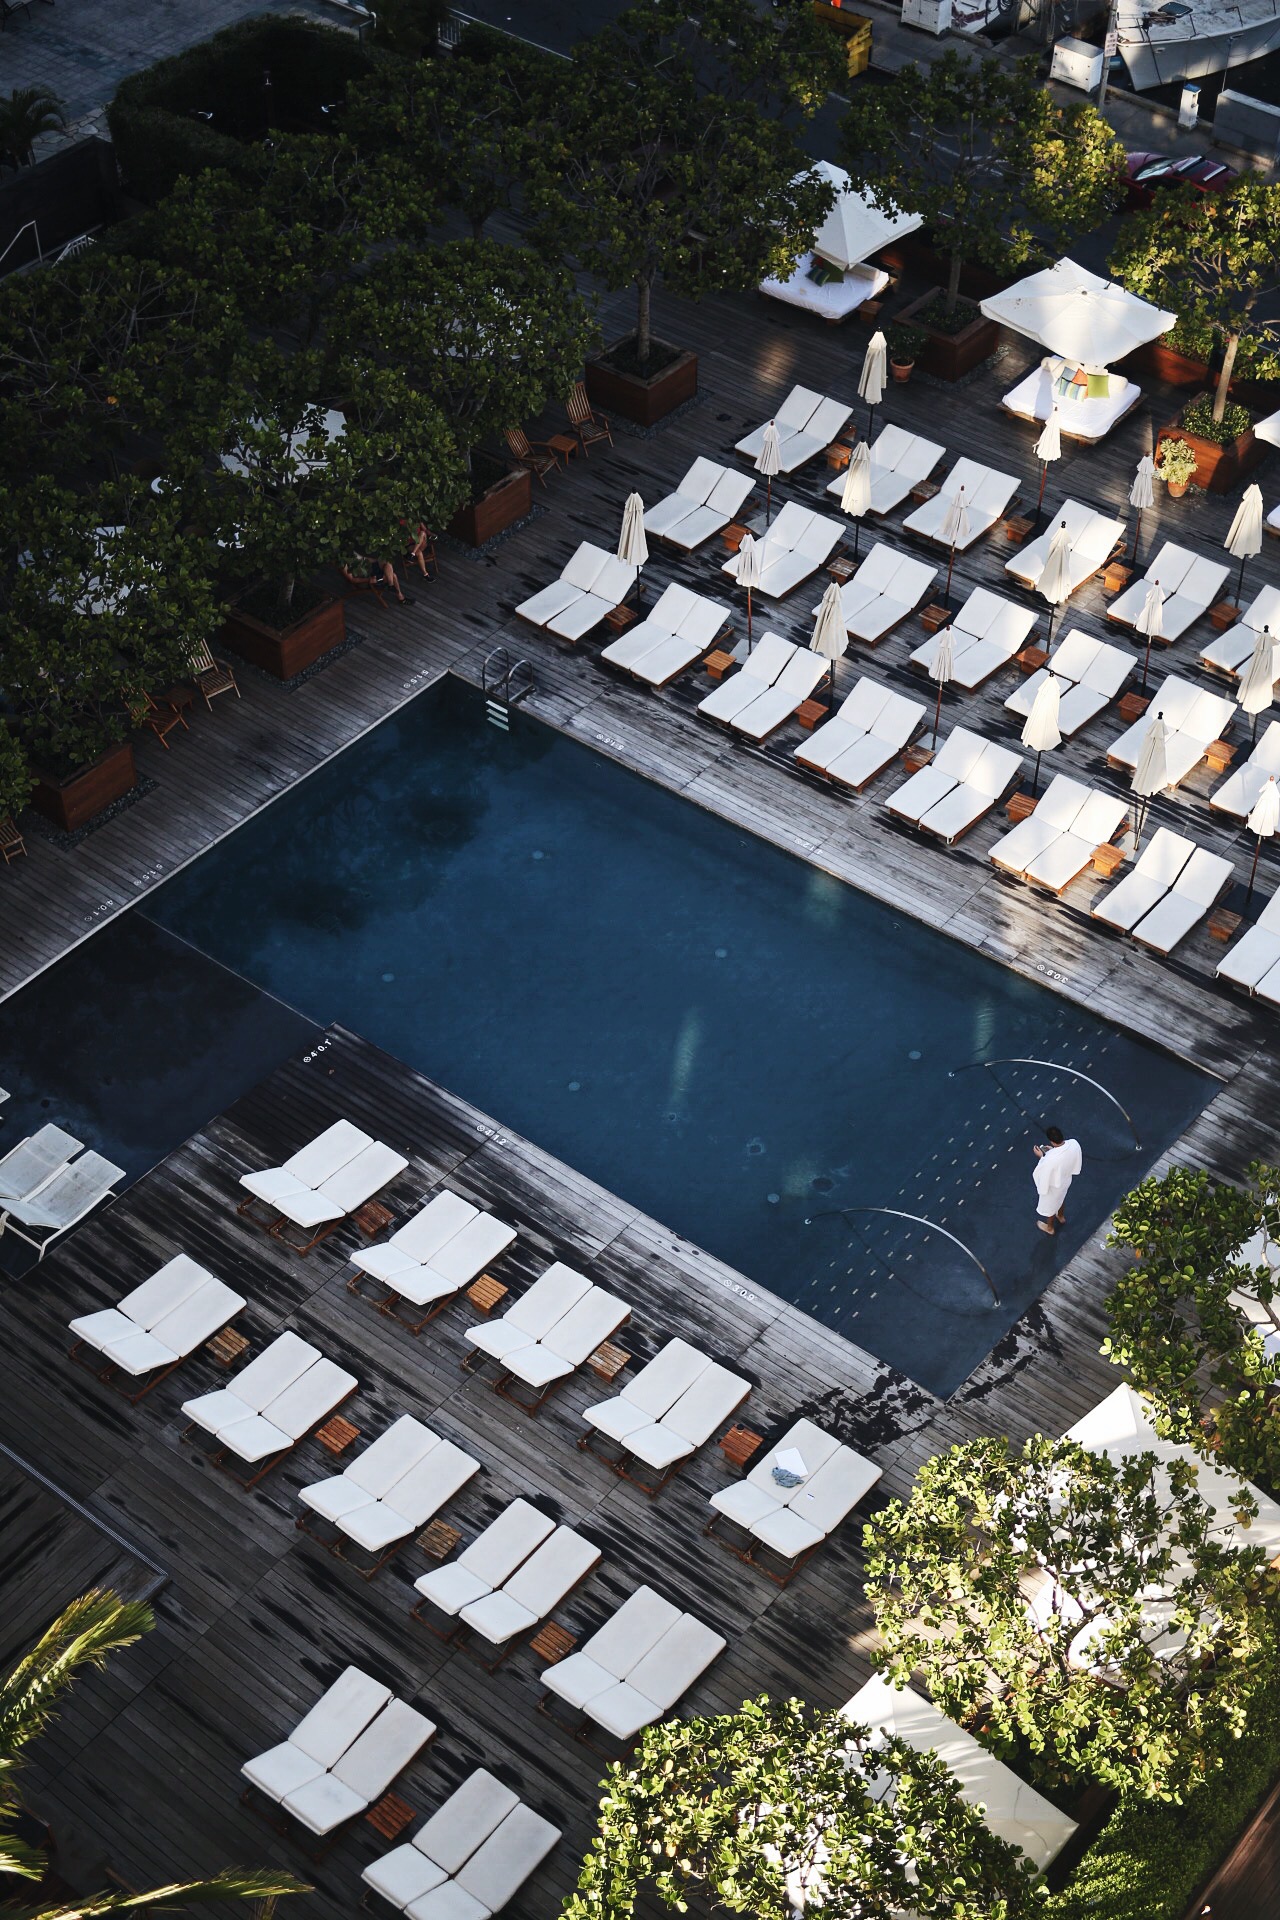 Summer Inspo | Weekend Goals | The Modern Honolulu | Best Hotels in Hawaii | Drinks at the Pool | Best Places to Stay in Honolulu | Travel Guide to Oahu via @elanaloo + elanaloo.com